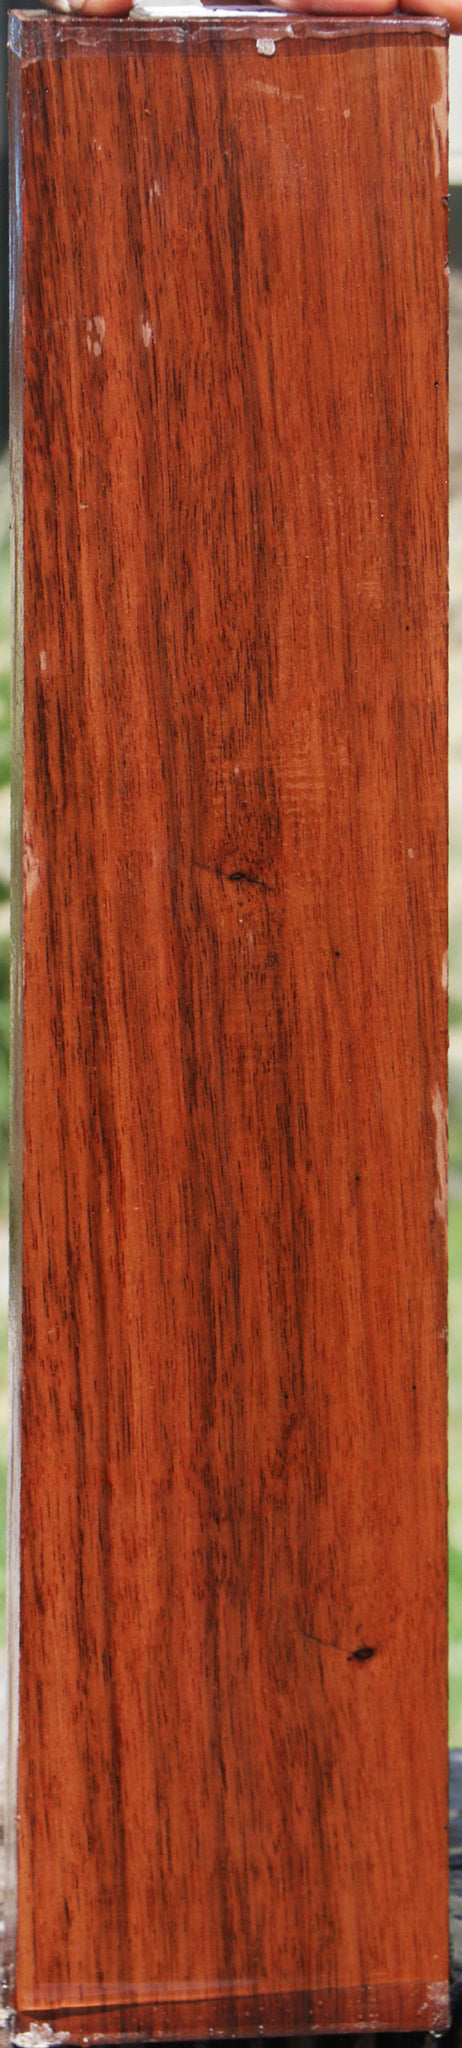 Macassar Ebony Lumber